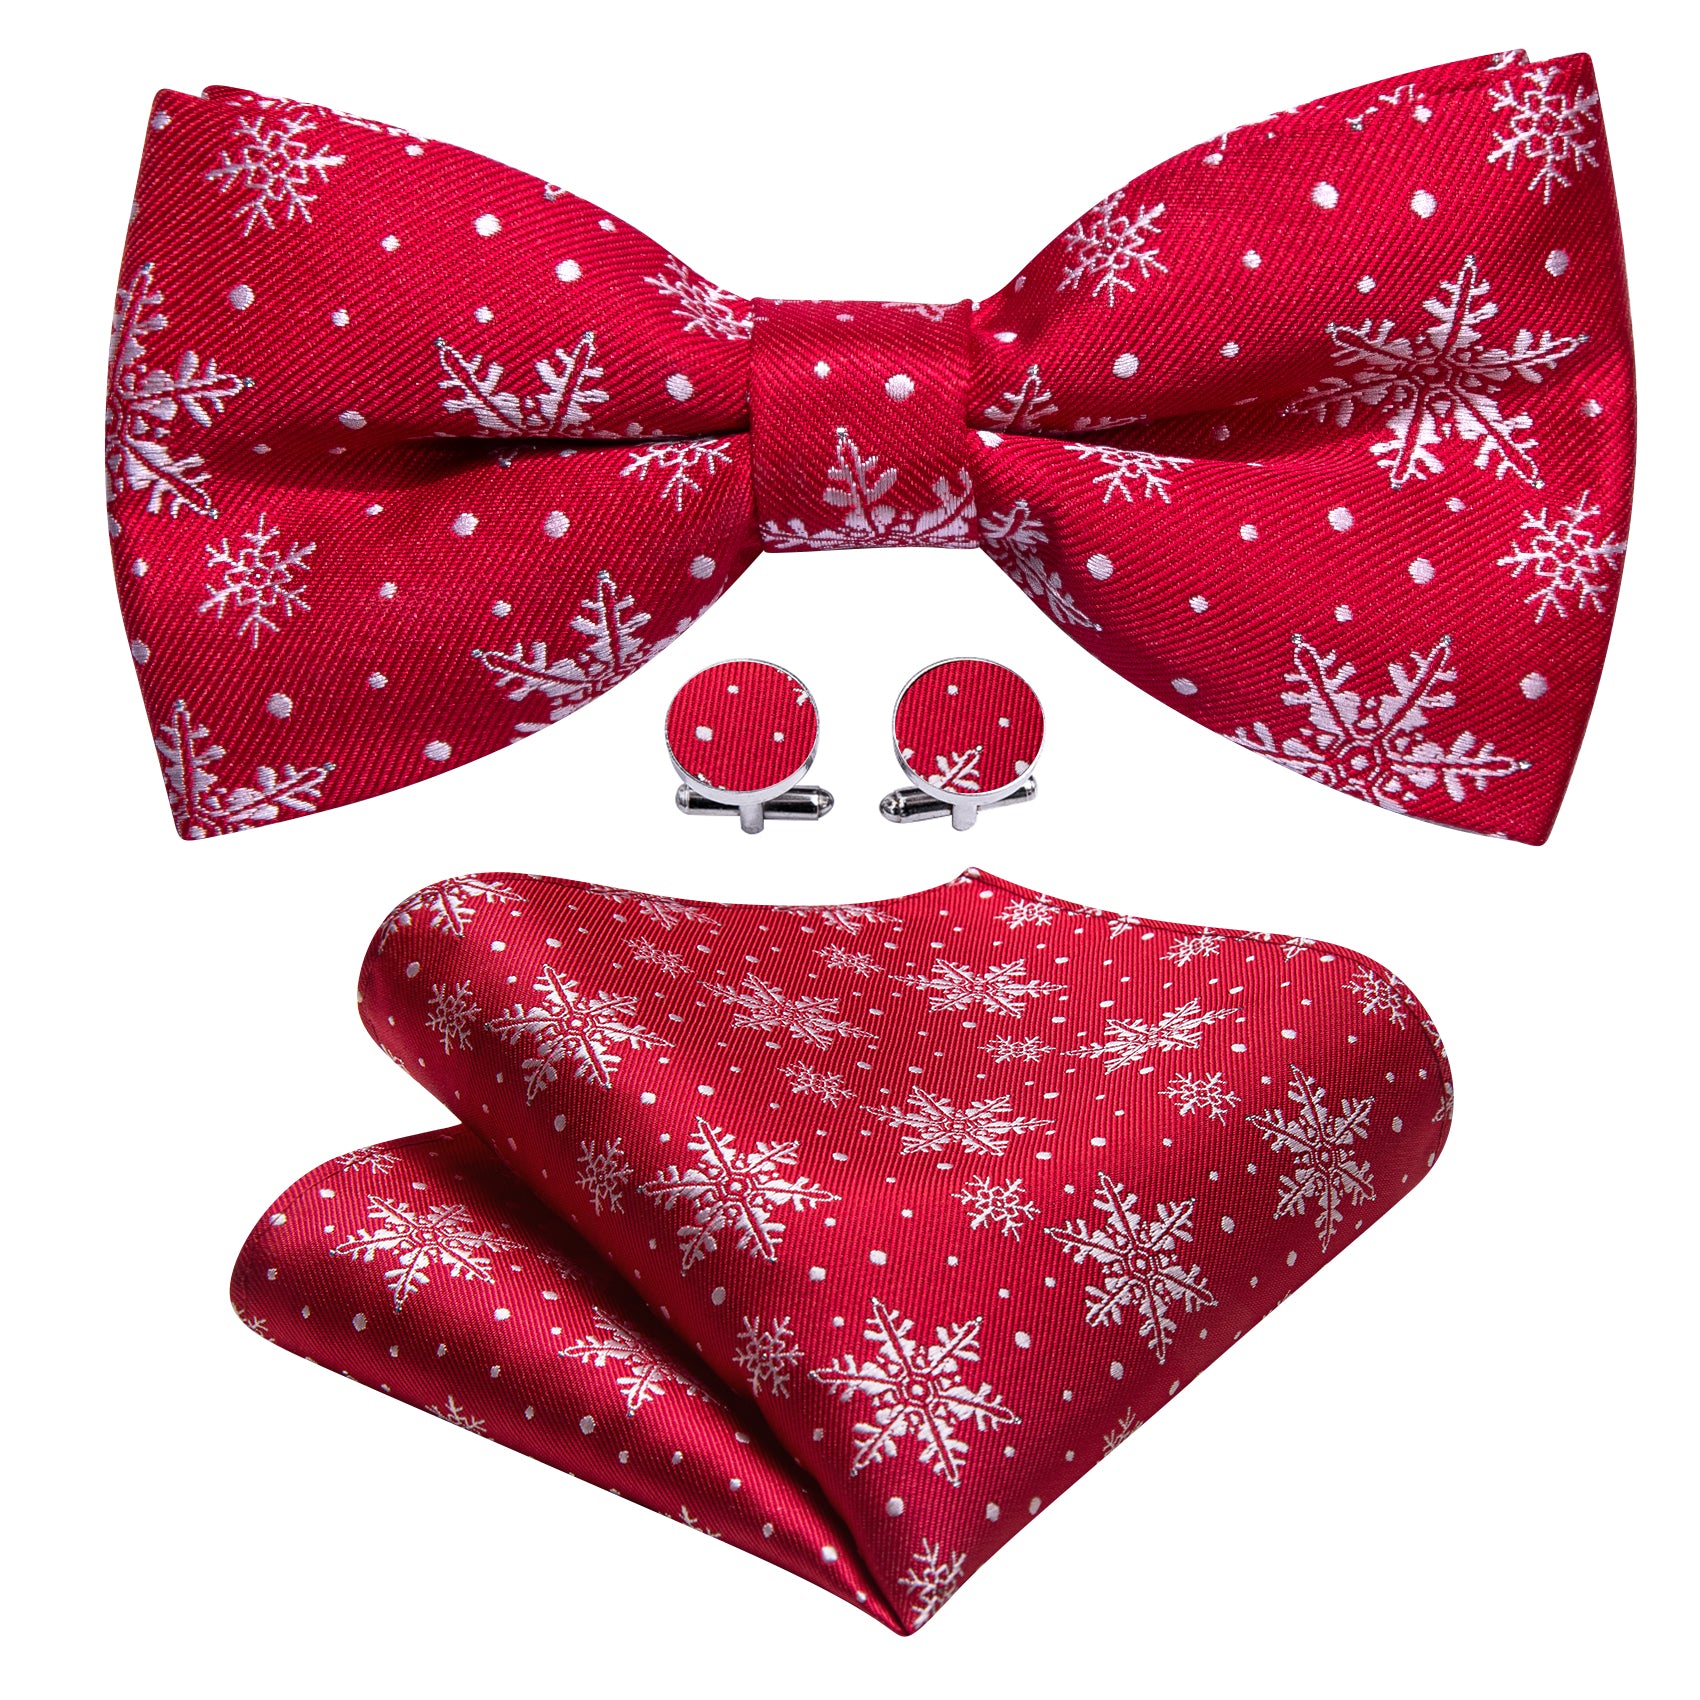 Barry.wang Christmas Tie Red White Snowflake Silk Pre-tied Bow Tie Hanky Cufflinks Set